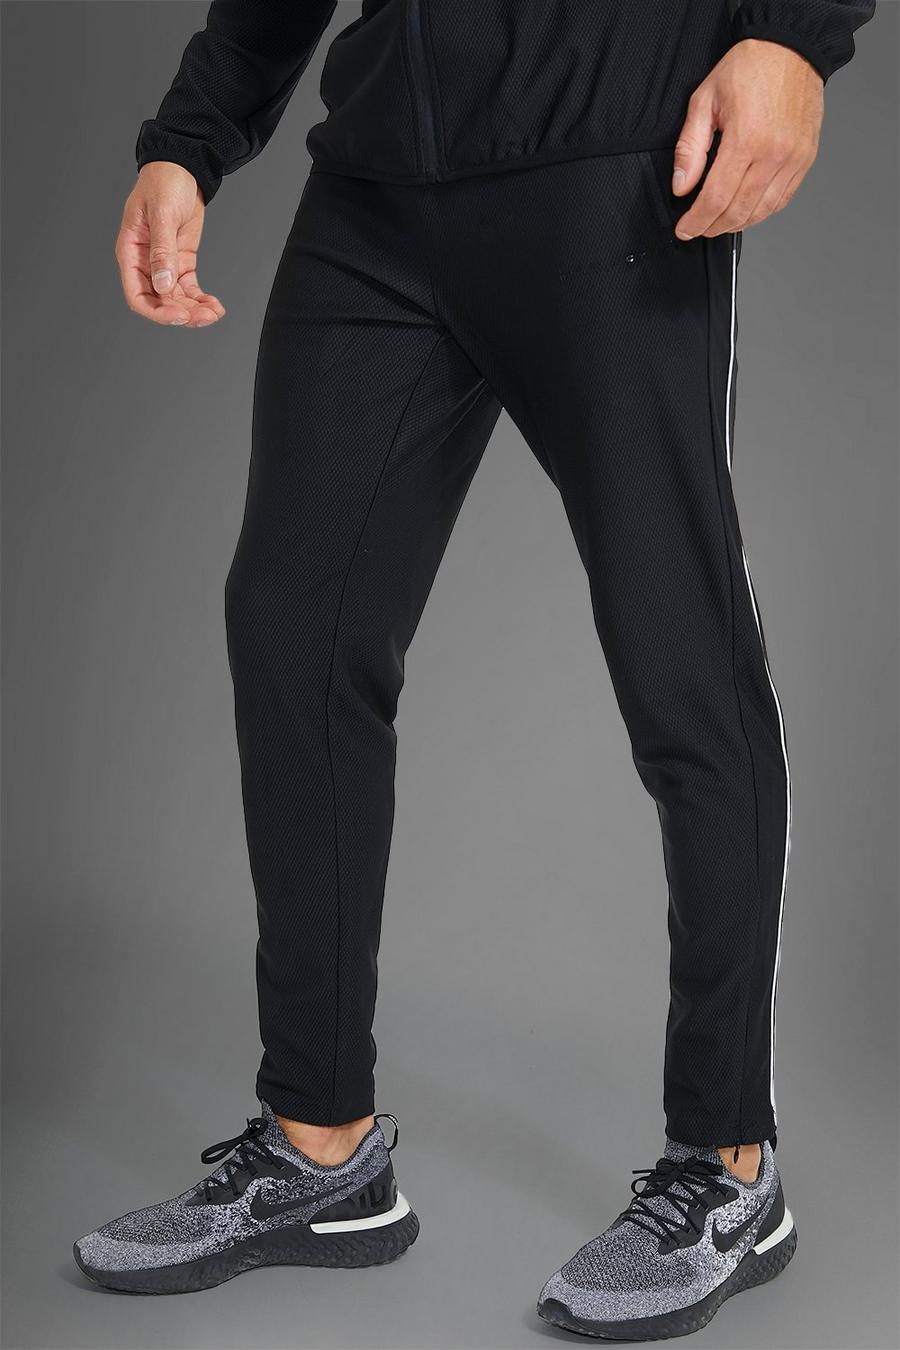 Pantaloni tuta Man Active Gym con cordoncino riflettente, Black image number 1